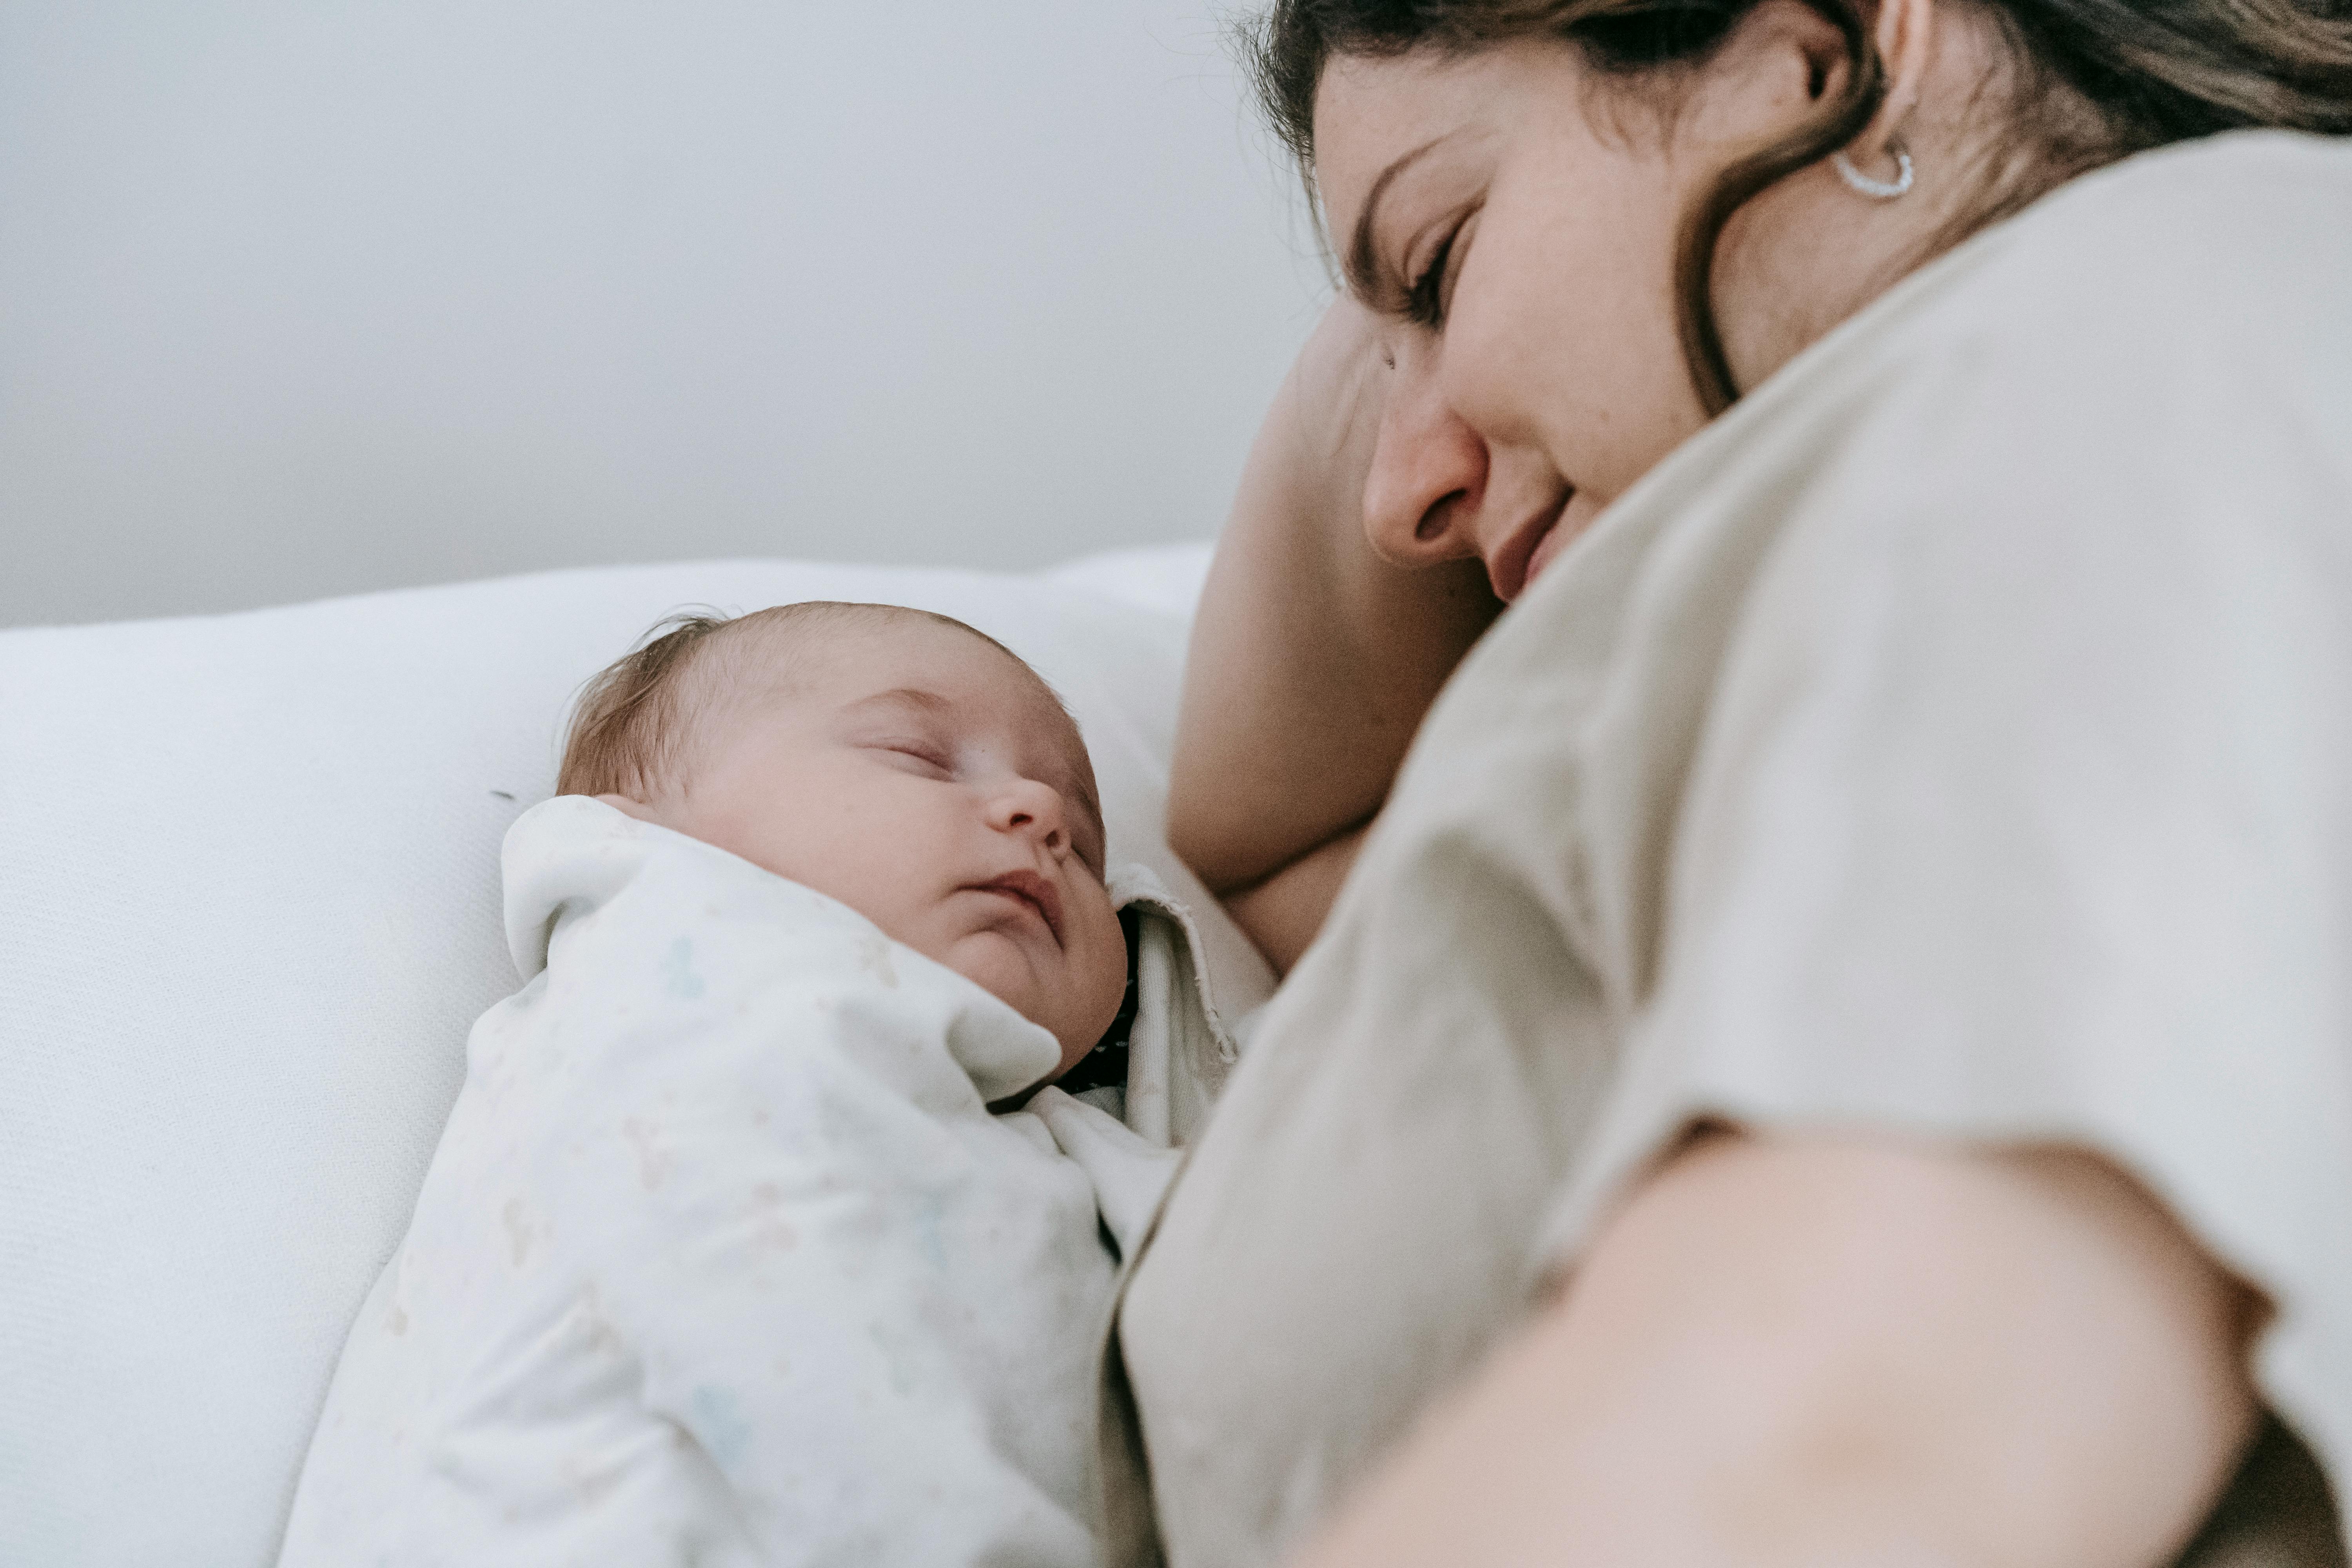 Top 5 Sleep Training Books to Help Your Baby Sleep